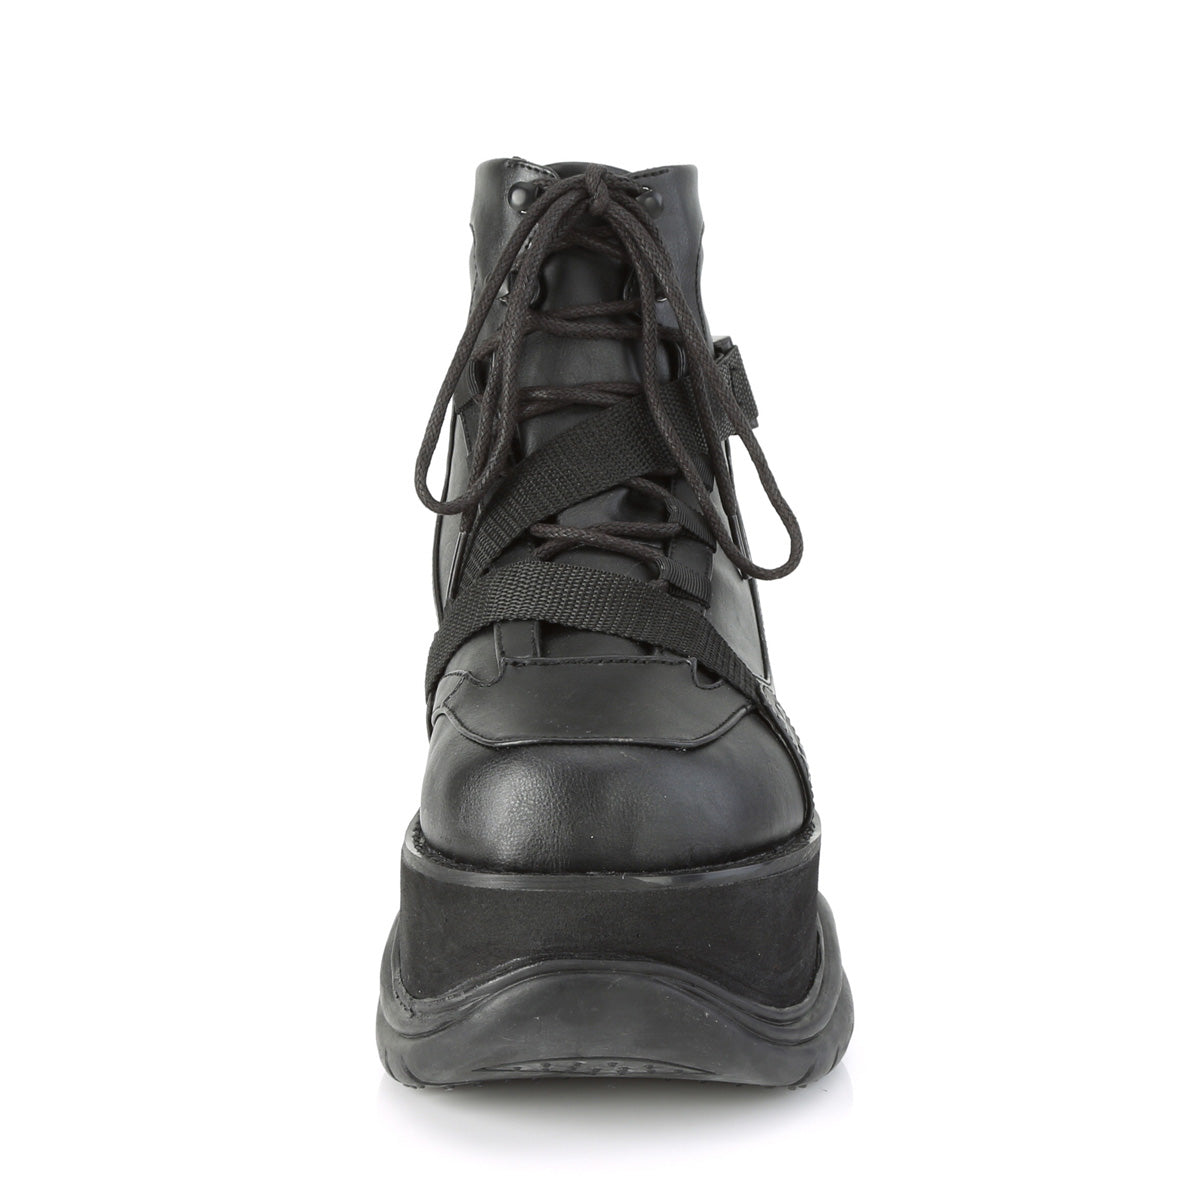 NEPTUNE-181 Black Vegan Leather Ankle Boot Demonia